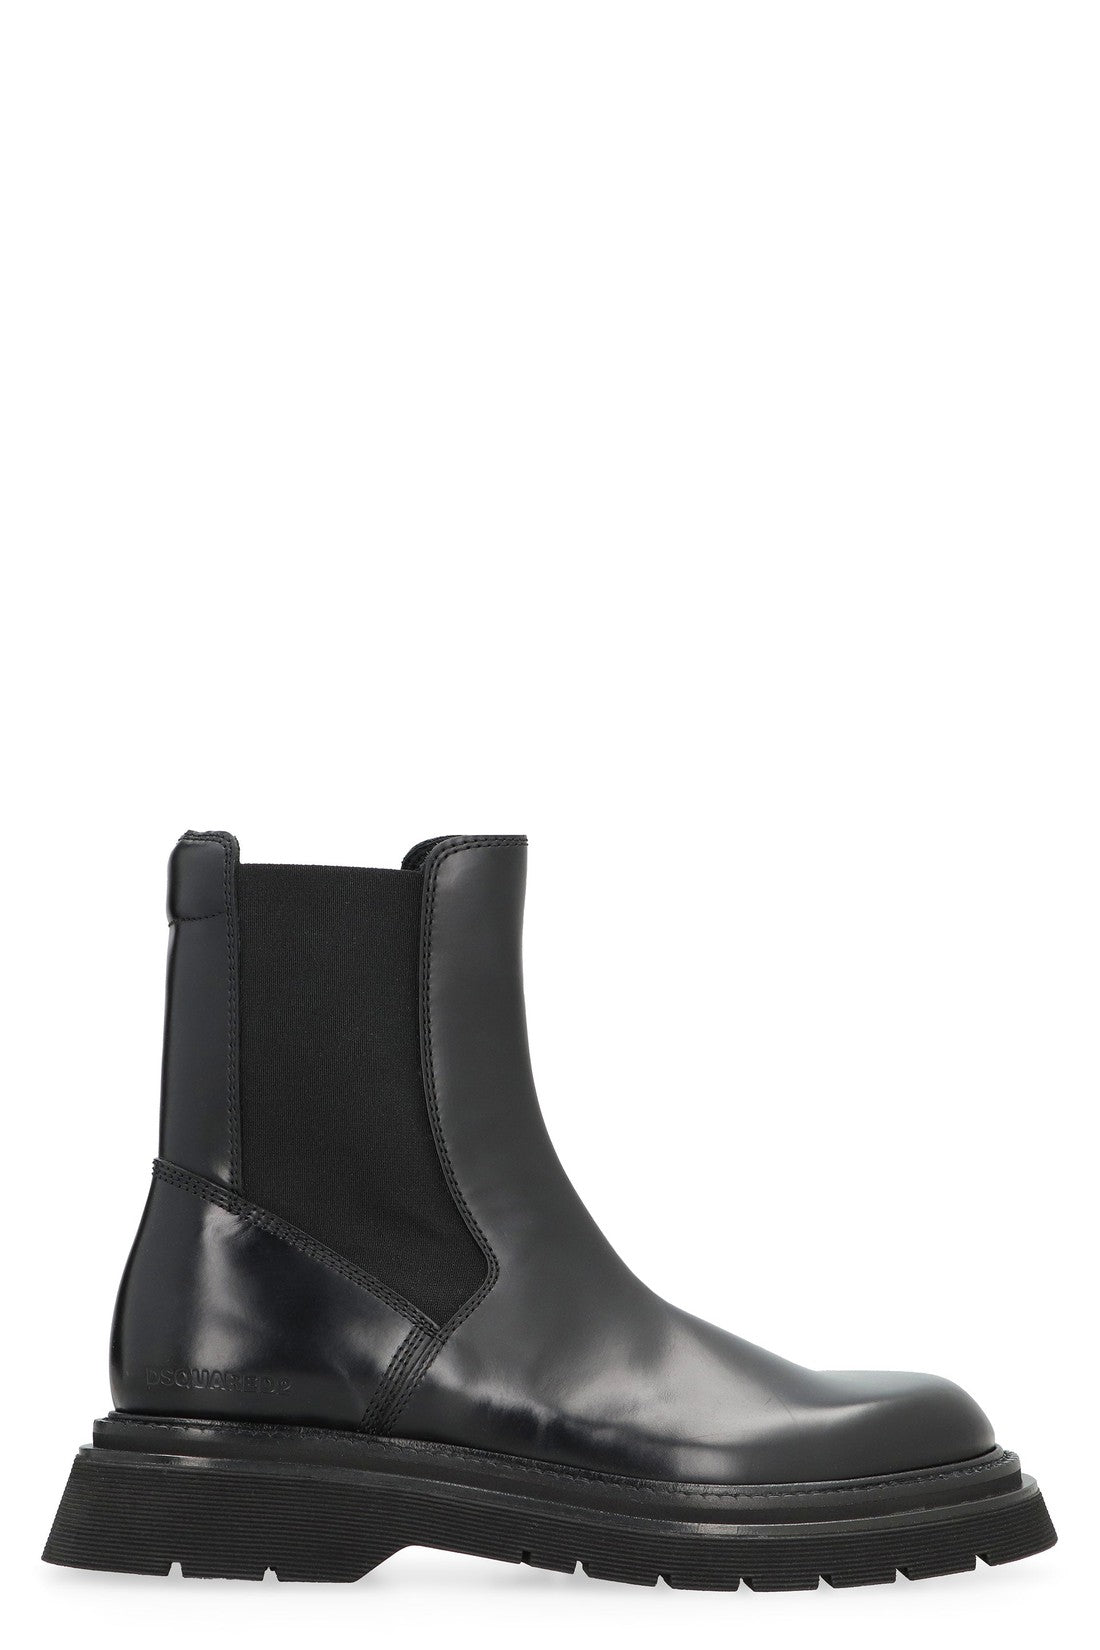 Dsquared2-OUTLET-SALE-Leather Chelsea boots-ARCHIVIST